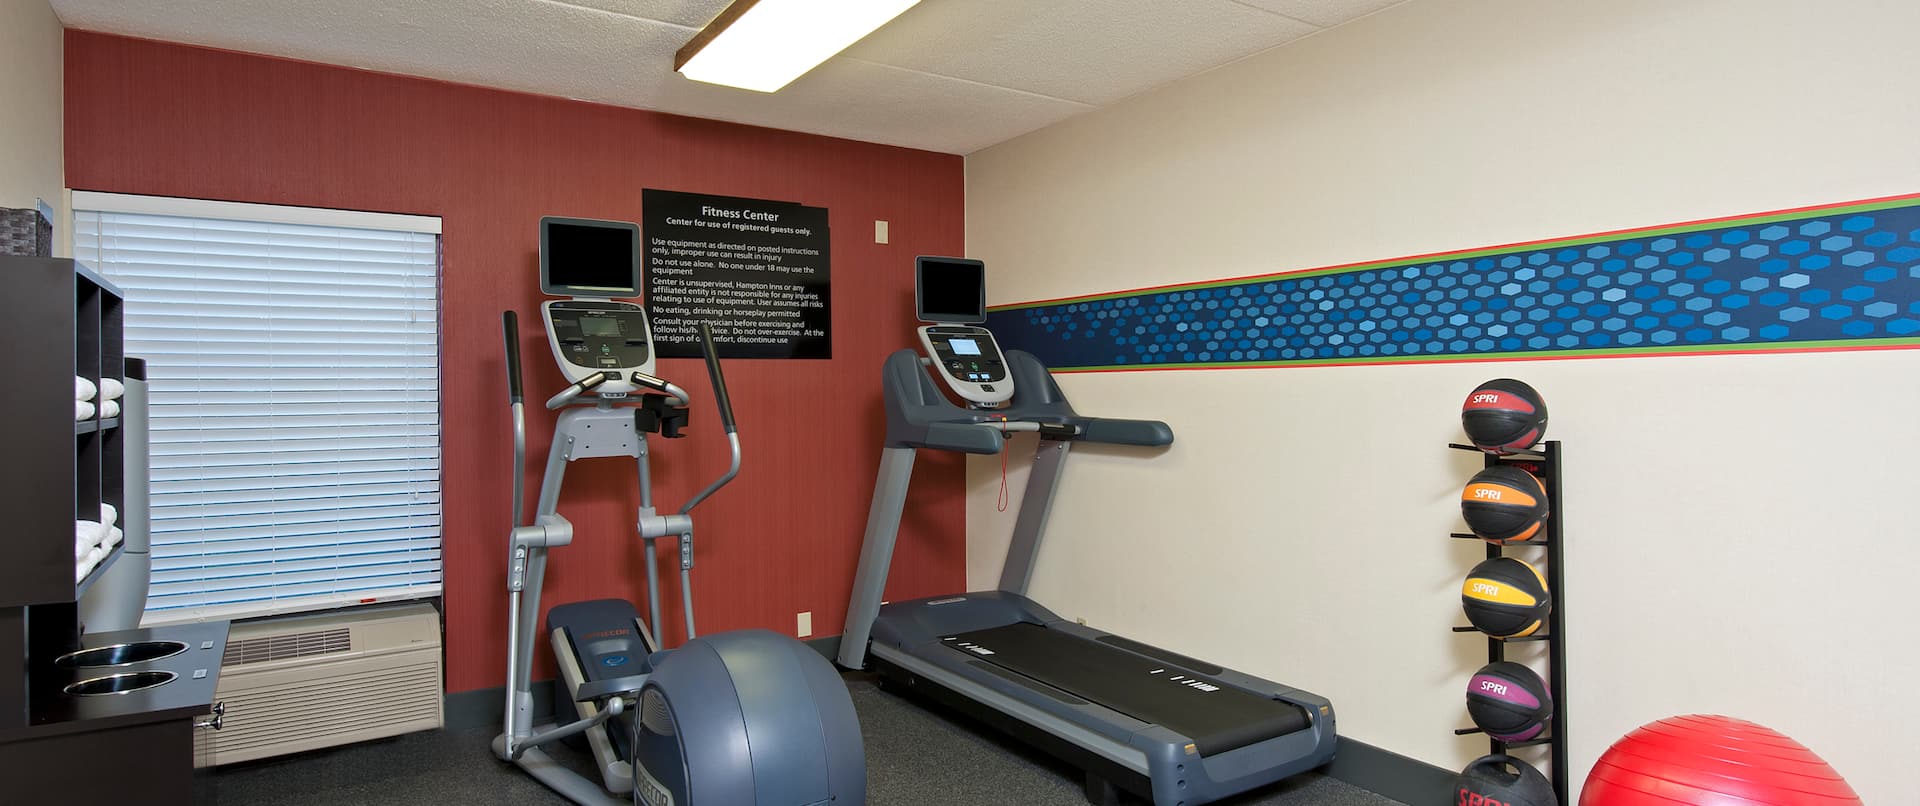 Cardio Fitness Room 